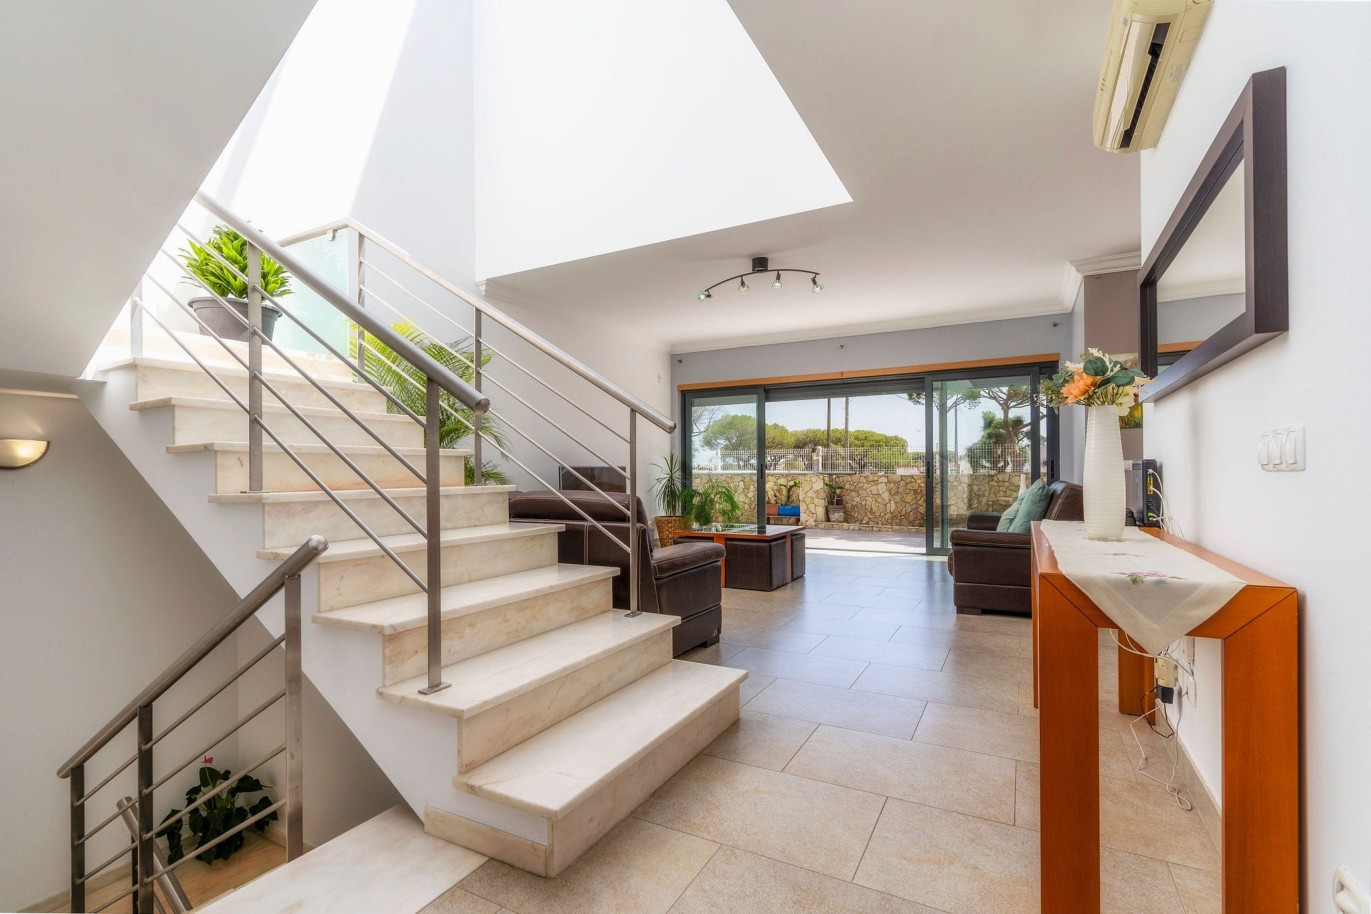 3+1 bedroom villa & 2 bedroom apartment for sale in Quarteira, Algarve_240767